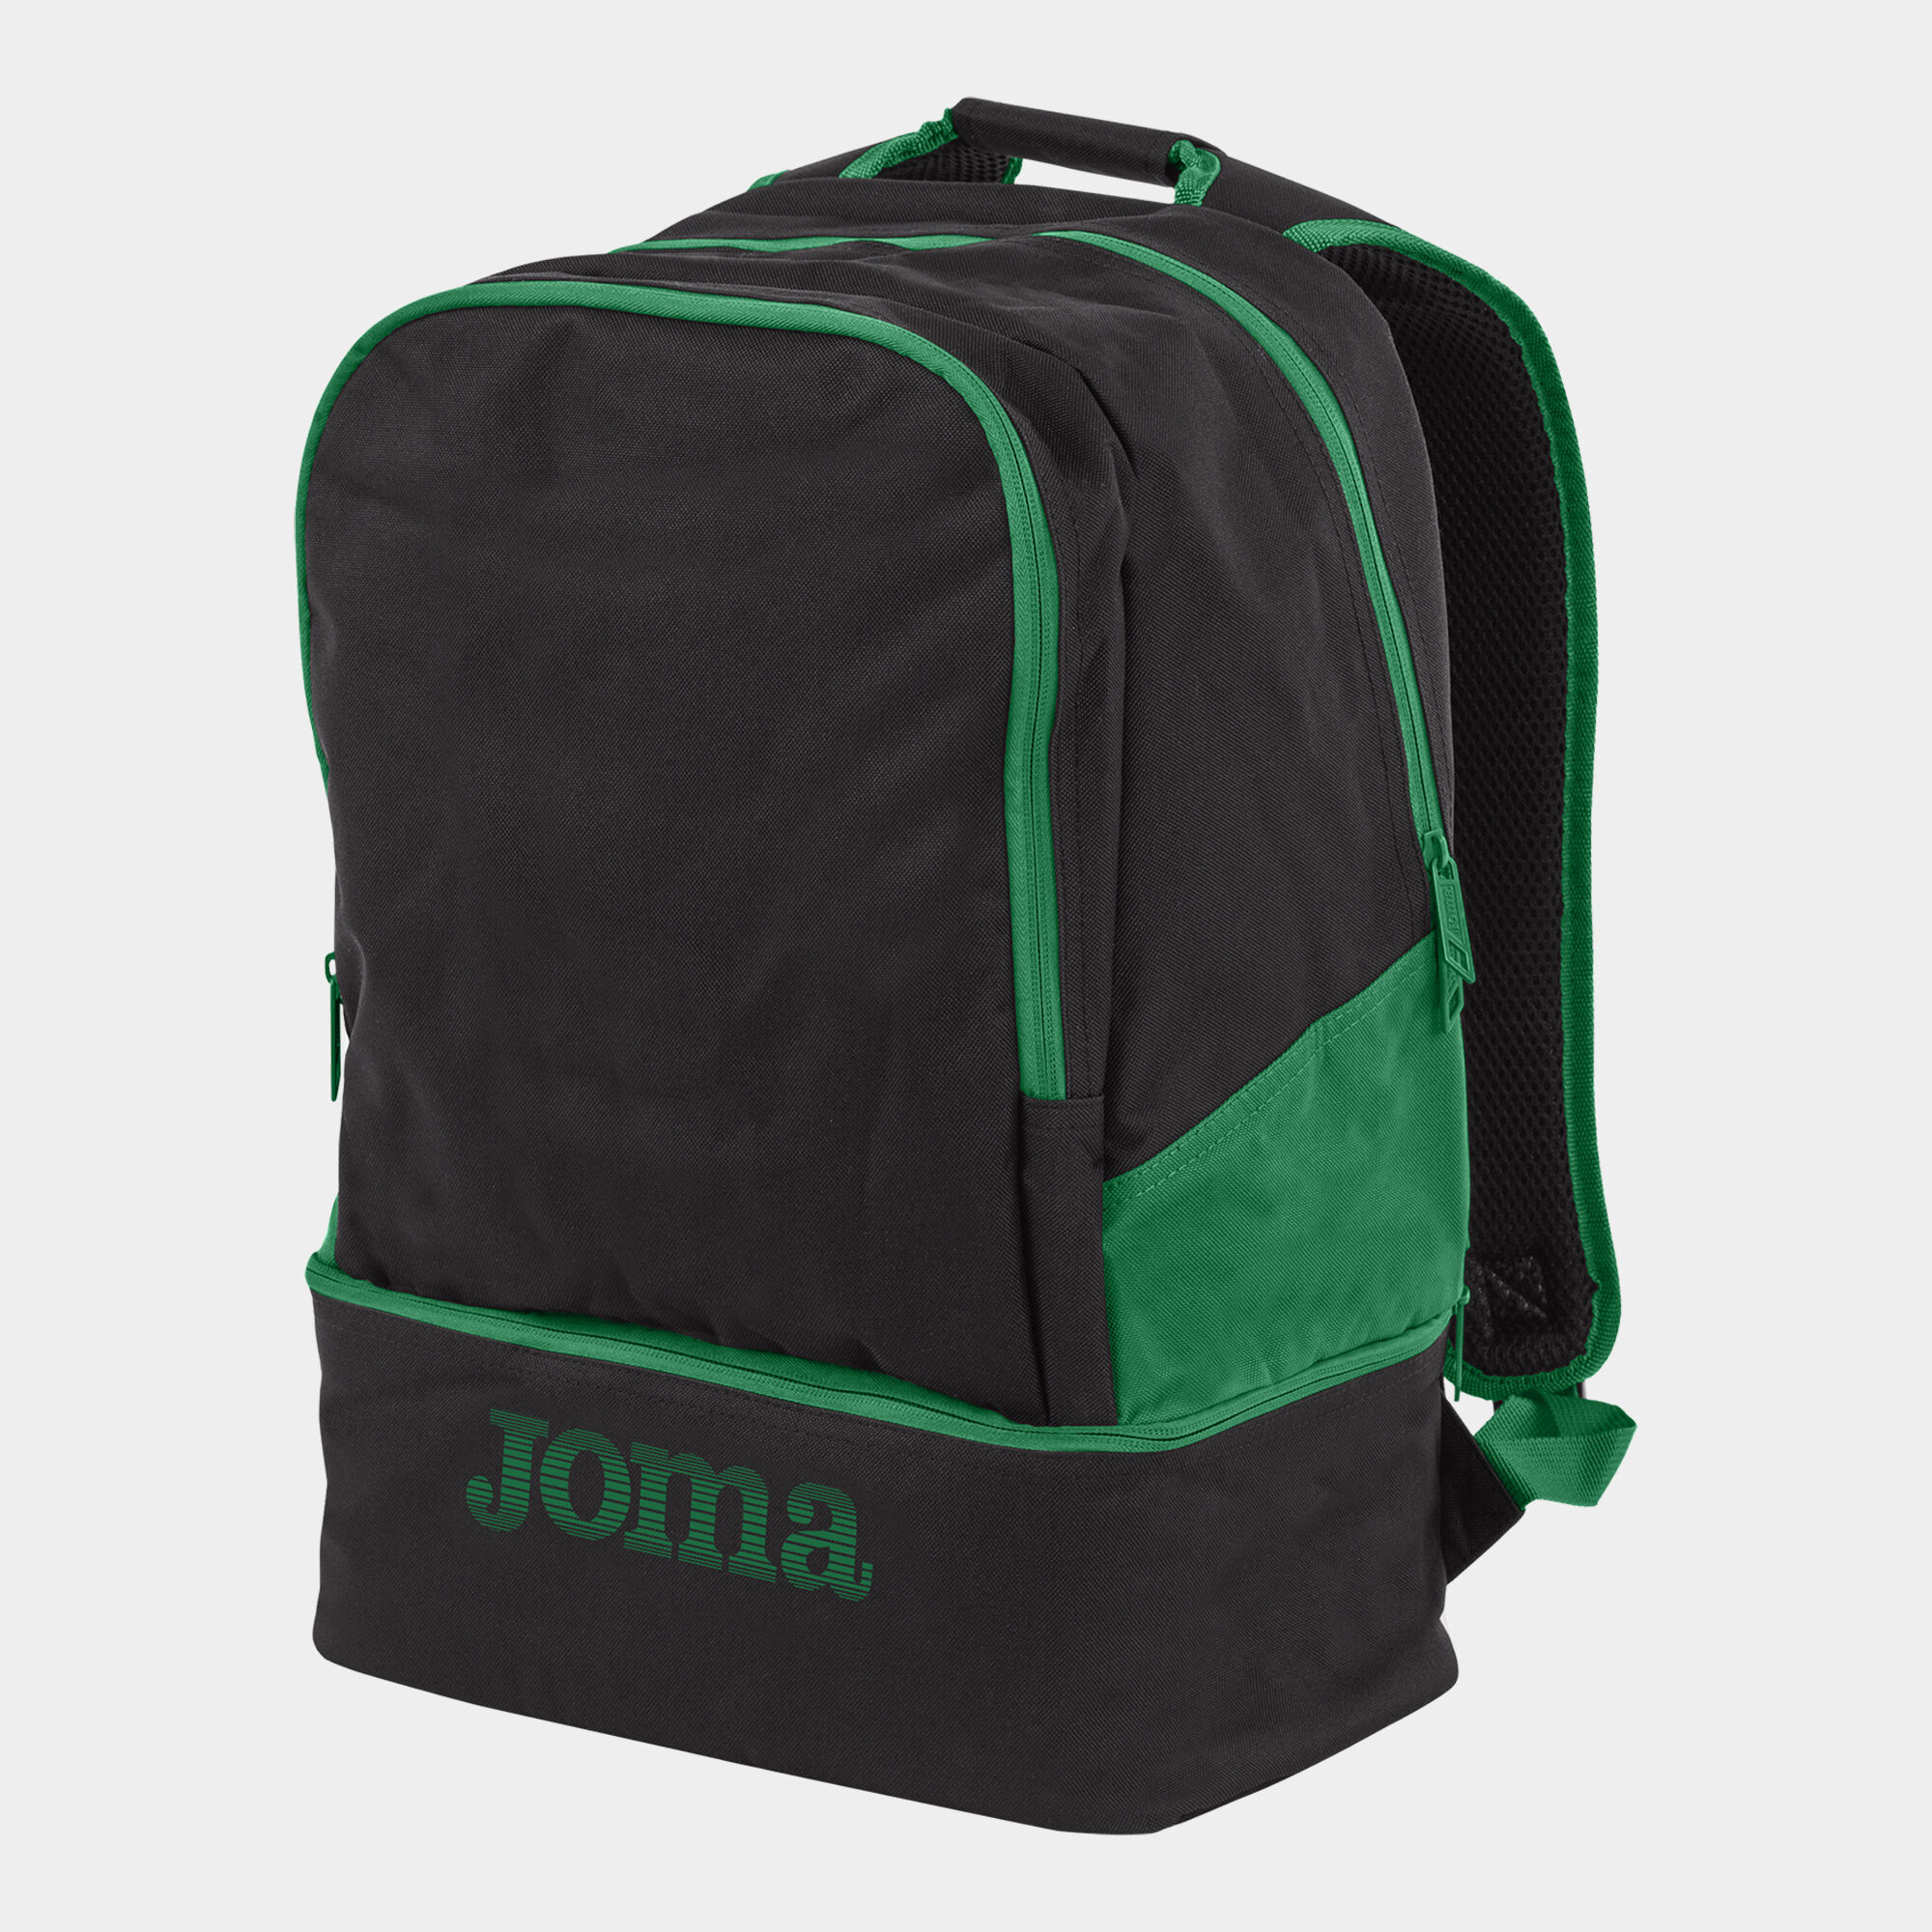 Backpack - shoe bag Estadio III black green